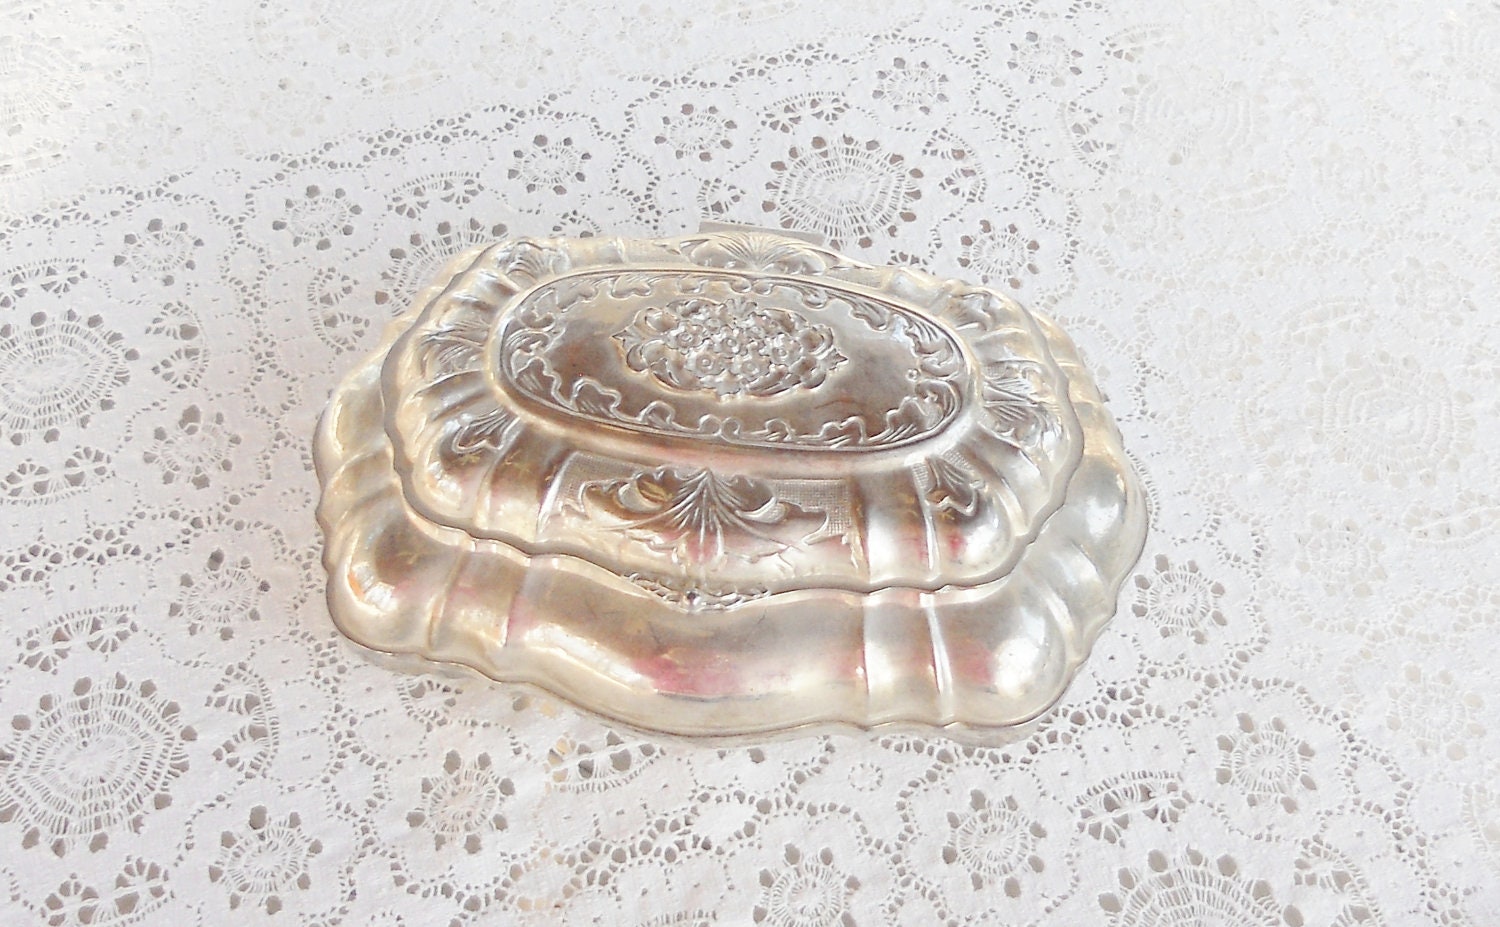 Shabby Chic / Romantic Cottage Silverplate Jewelry Box - RosebudsOriginals